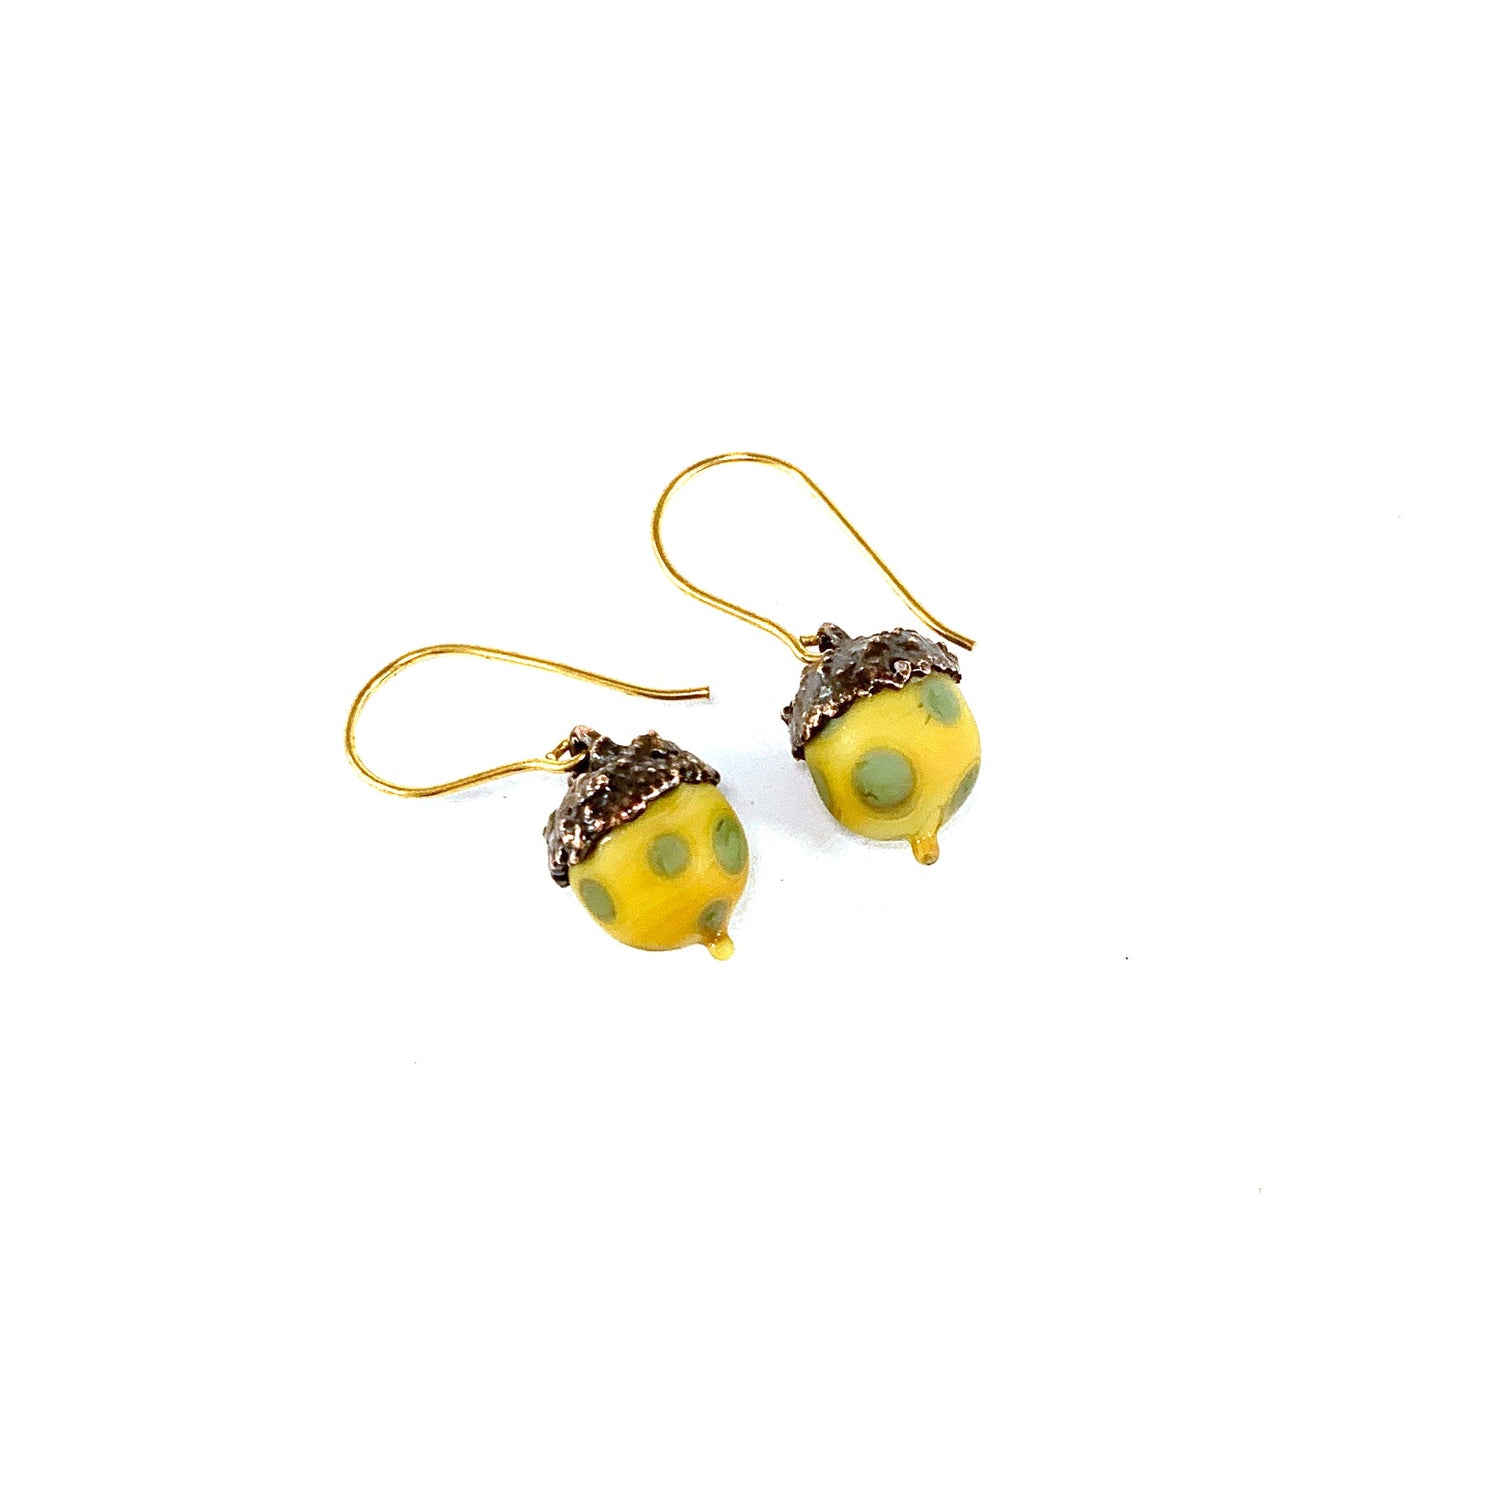 Tiny Acorn Earrings - The Glass Acorn